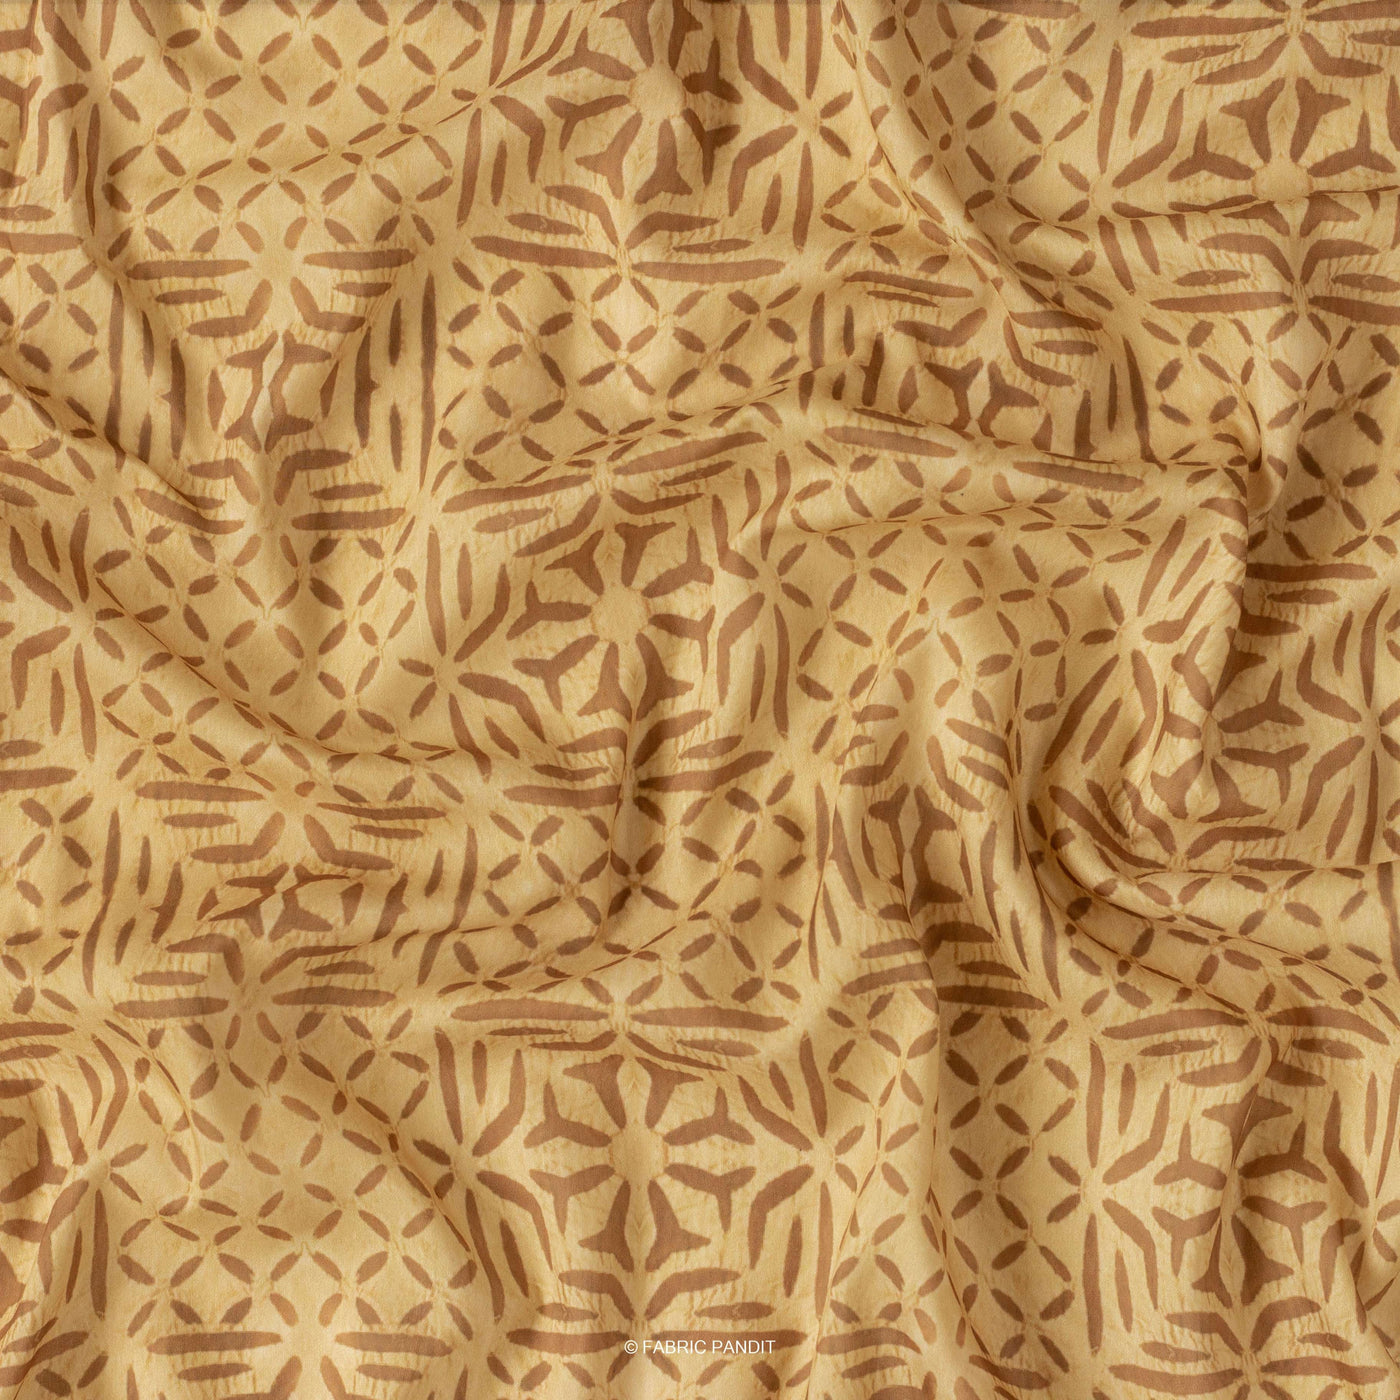 Fabric Pandit Cut Piece (Cut Piece) Dusty Brown Abstract Diamond Applique Pattern Digital Printed Muslin Fabric (Width 44 Inches)